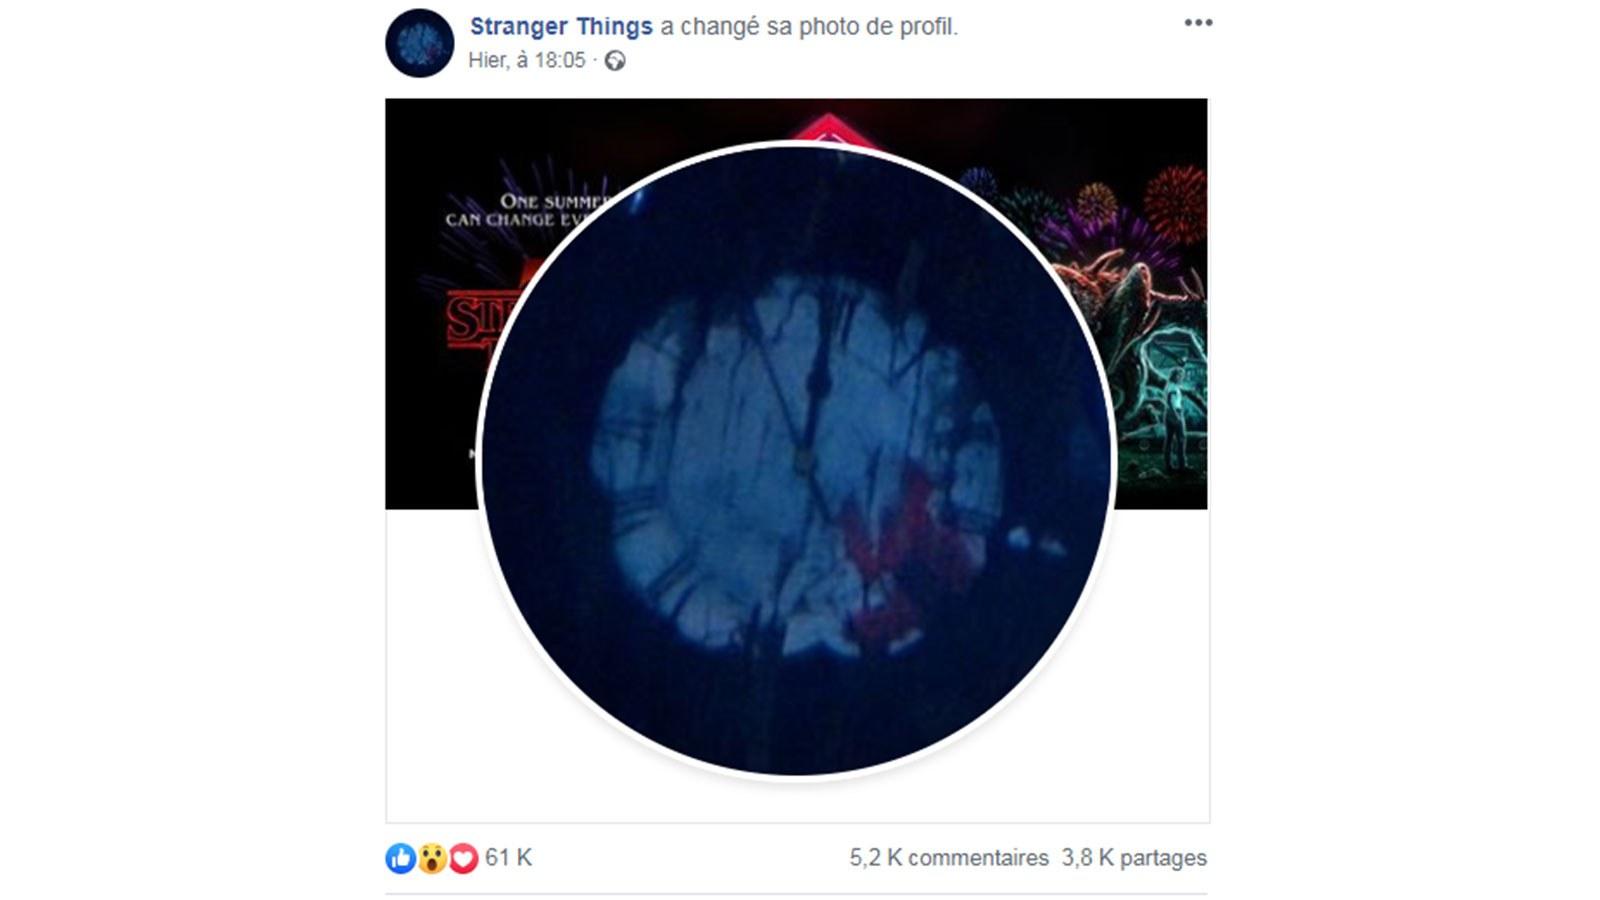 Stranger Things, Facebook